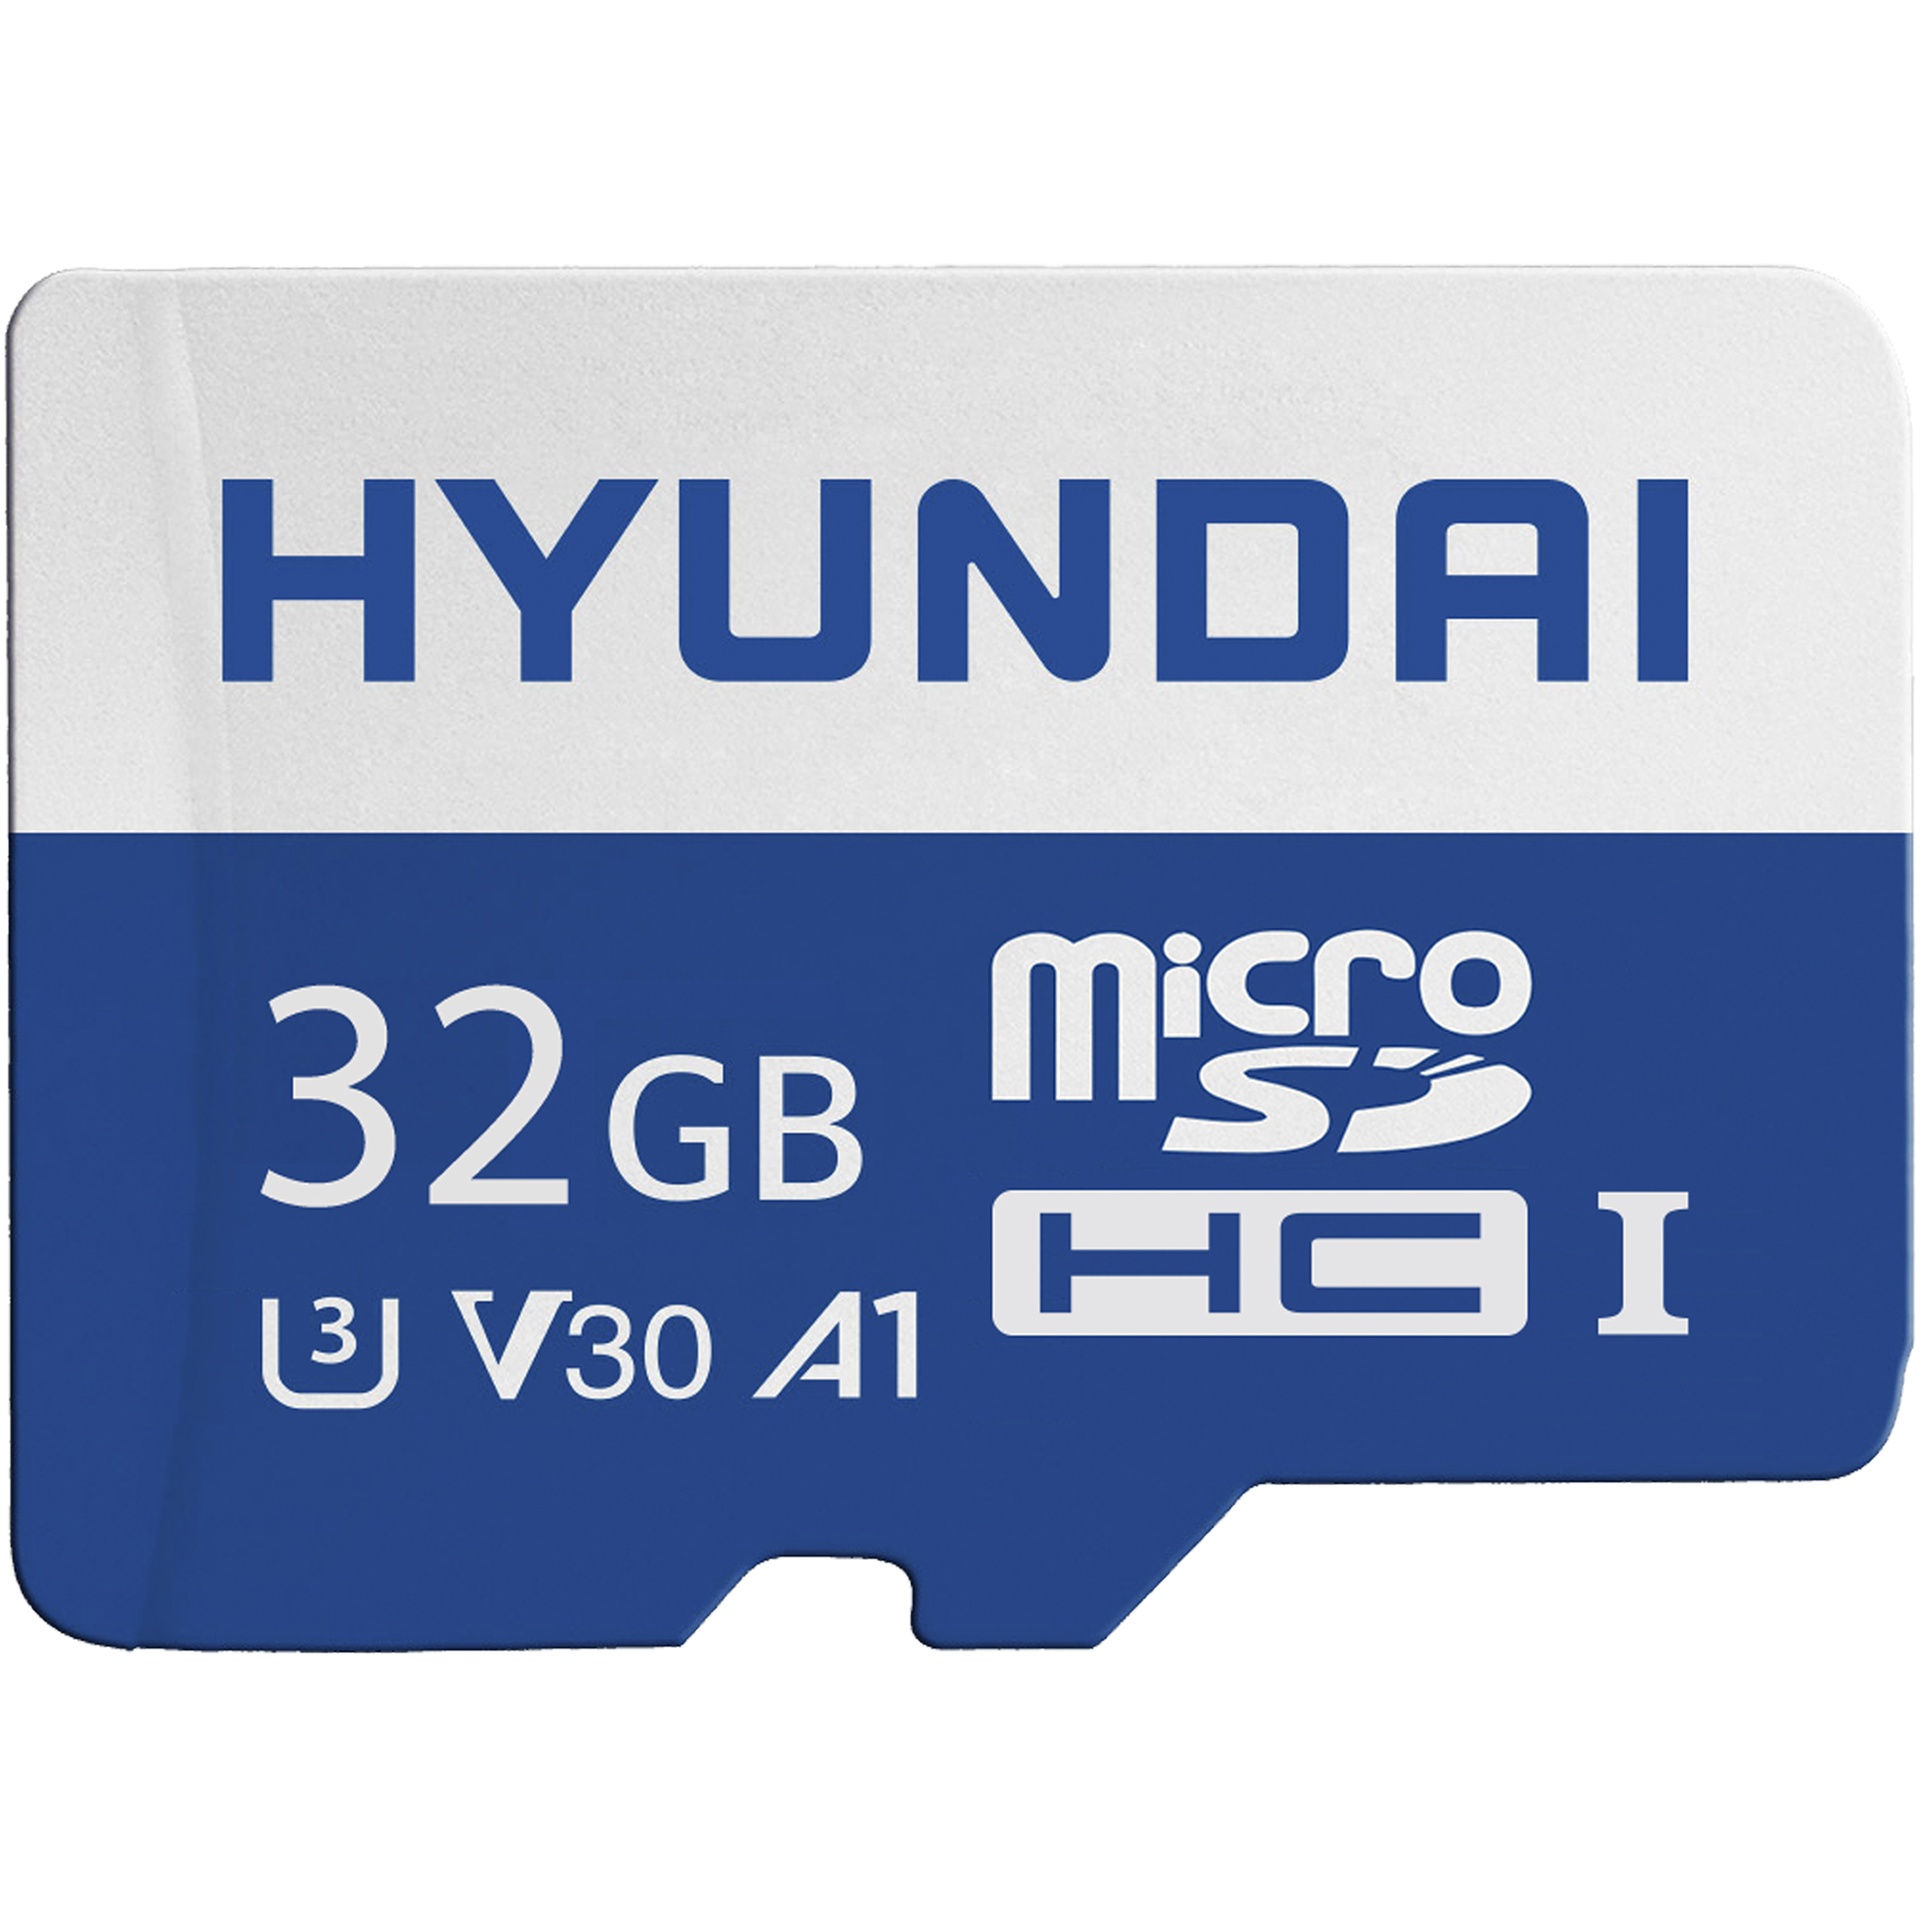 Hyundai 32GB microSDHC UHS-I Memory Card with Adapter, 90MB/s (U3), UHD, A1, V30 SDC32GU3 UPC 810033035296 - SDC32GU3